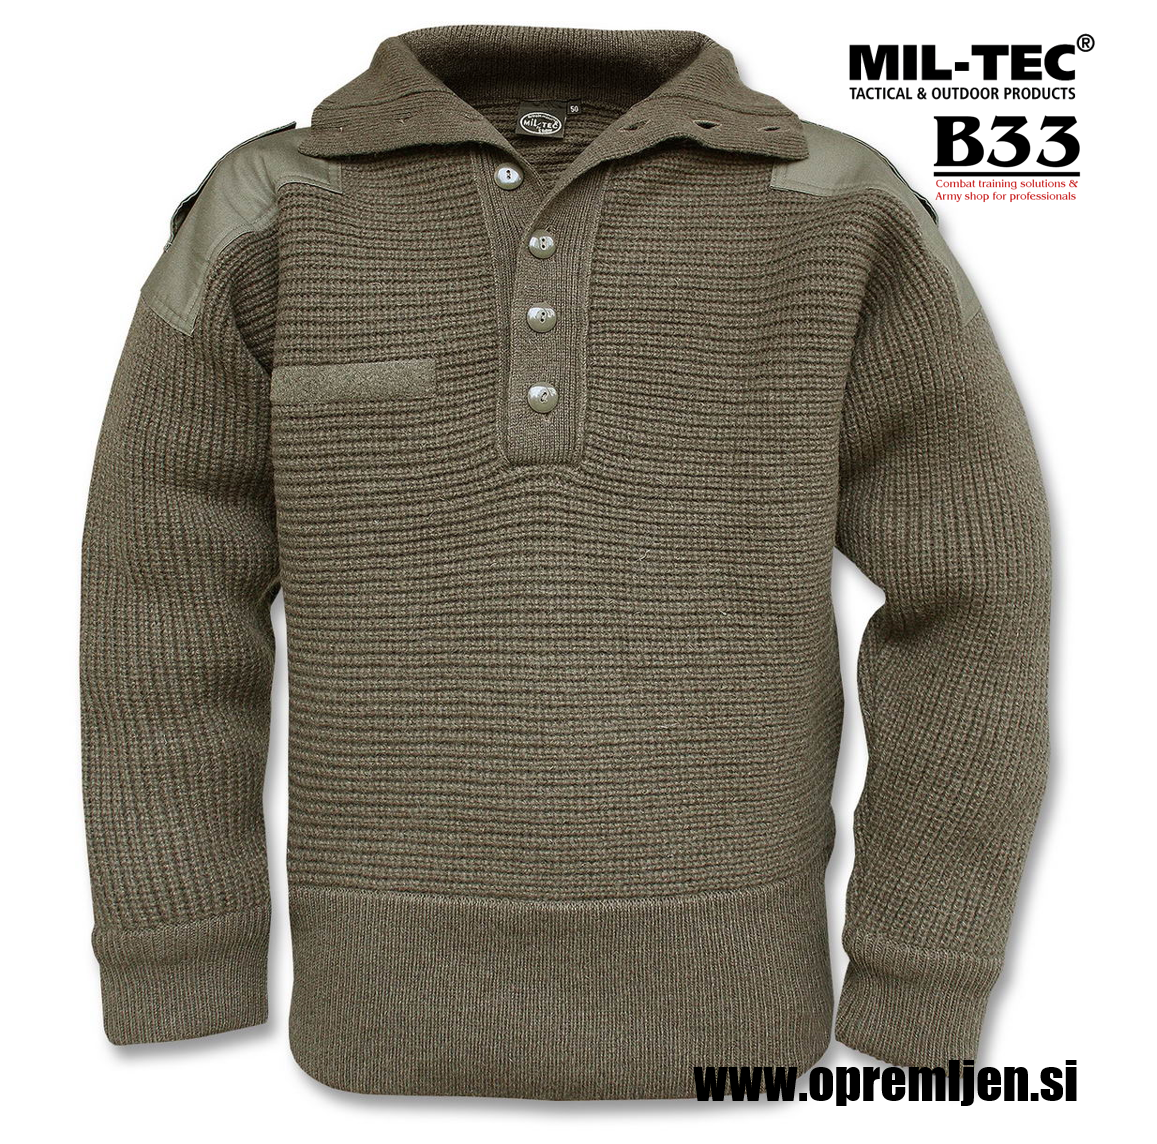 B33 army shop - Alpski vojaški pulover, Vojaški volneni pulover, Vojaški pulover iz volne, Vojaški pulover iz 100% volne, lovski pulover, lovski volneni pulover, MILTEC, MIL-TEC by B33 army shop at www.opremljen.si, trgovina z vojaško opremo, vojaška trgovina